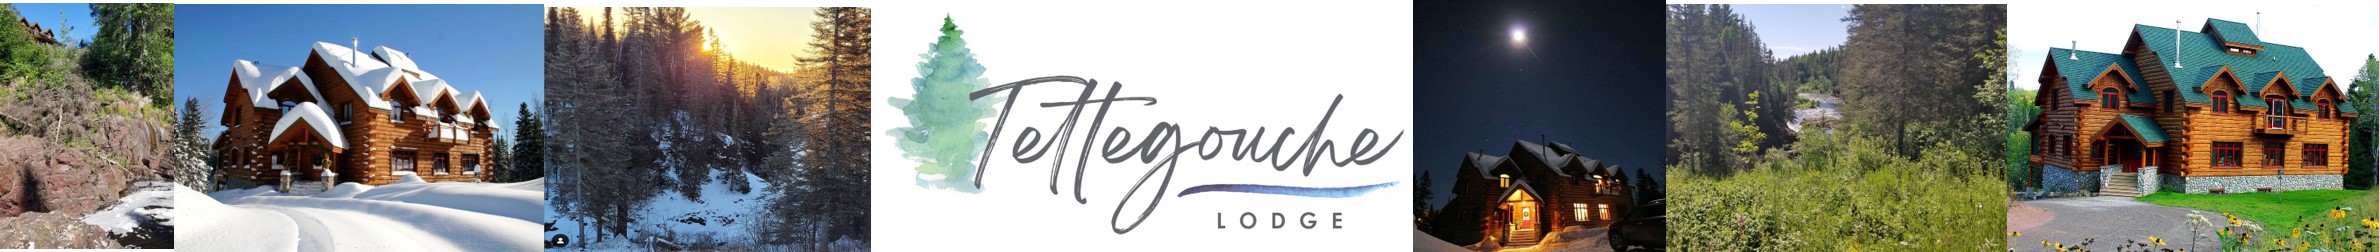 Tettegouche Lodge